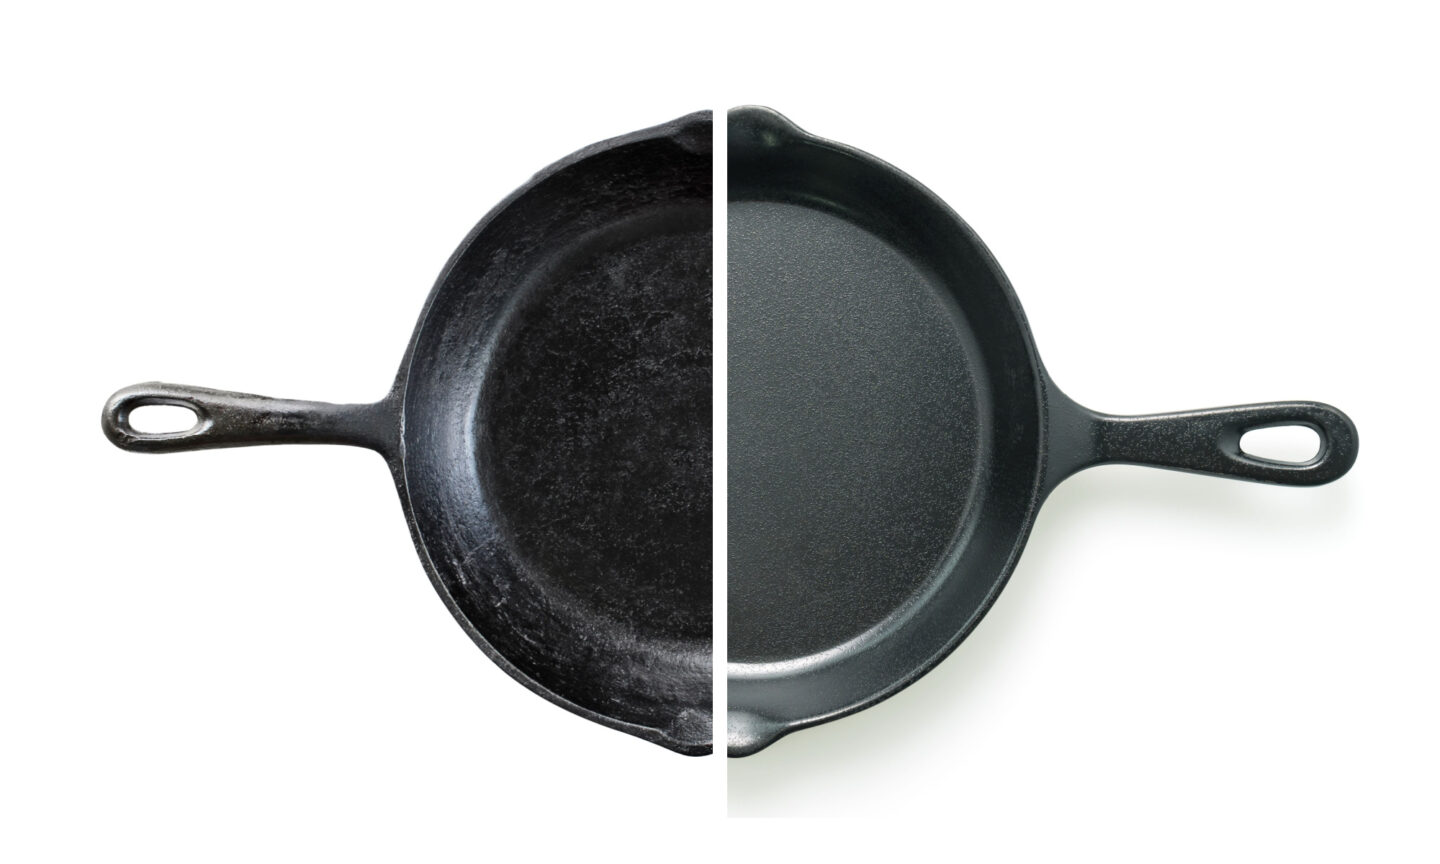 rought textured pan versus smooth pan